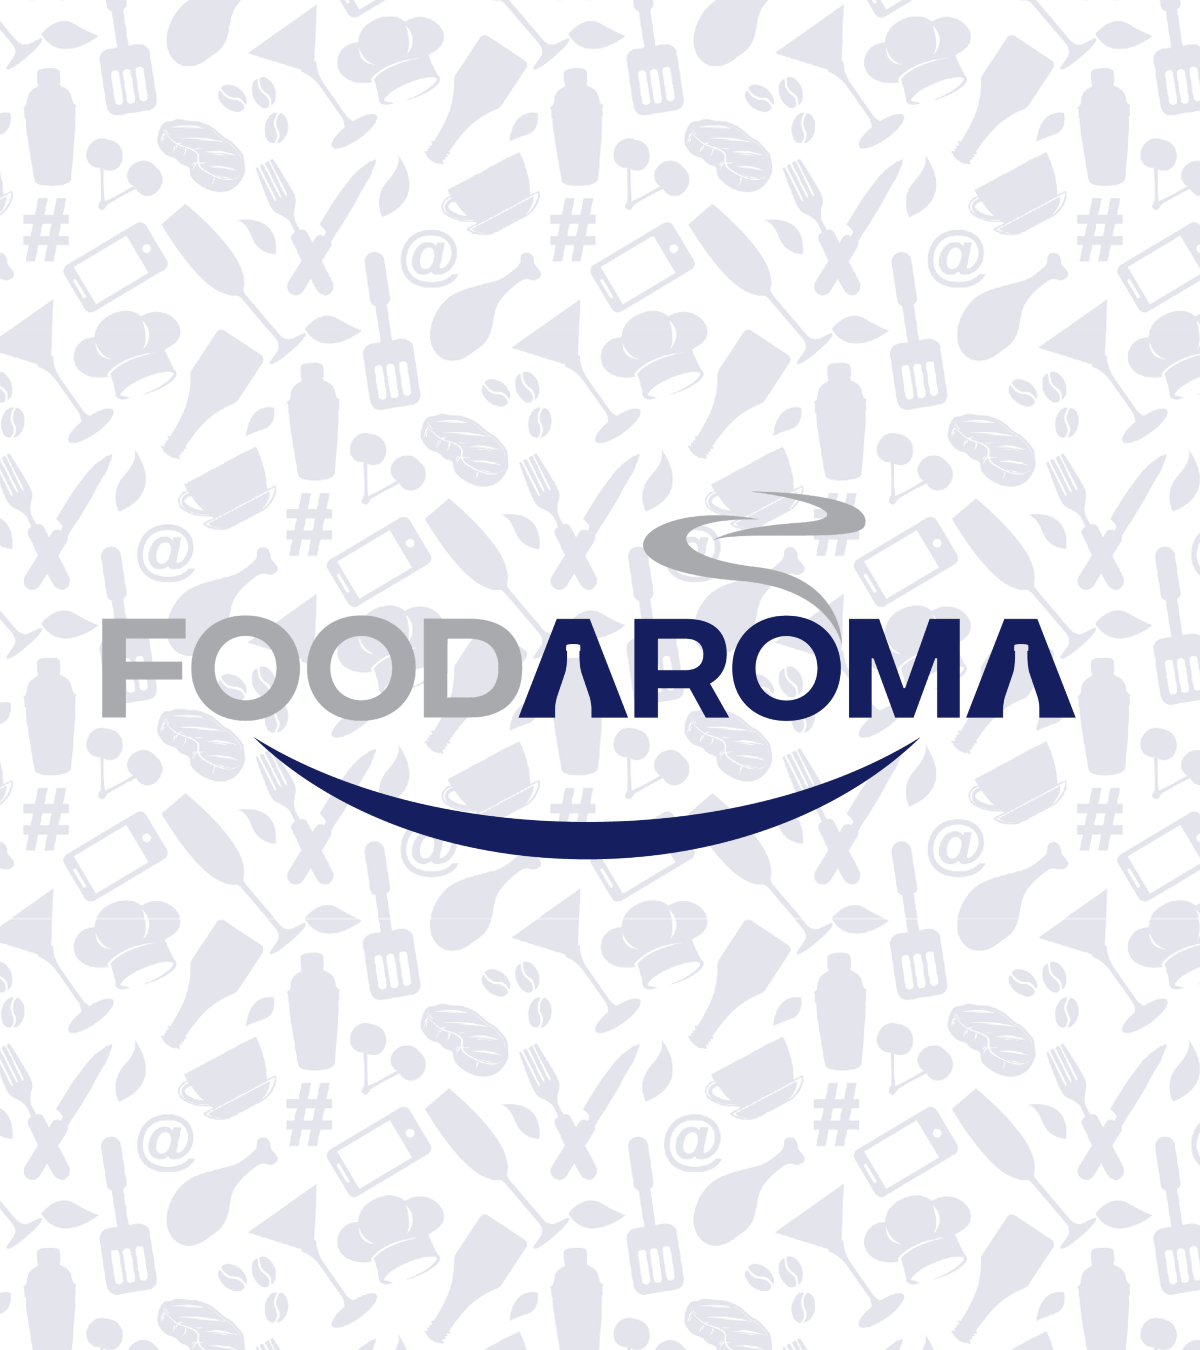 Food Aroma – Get To Know Us!